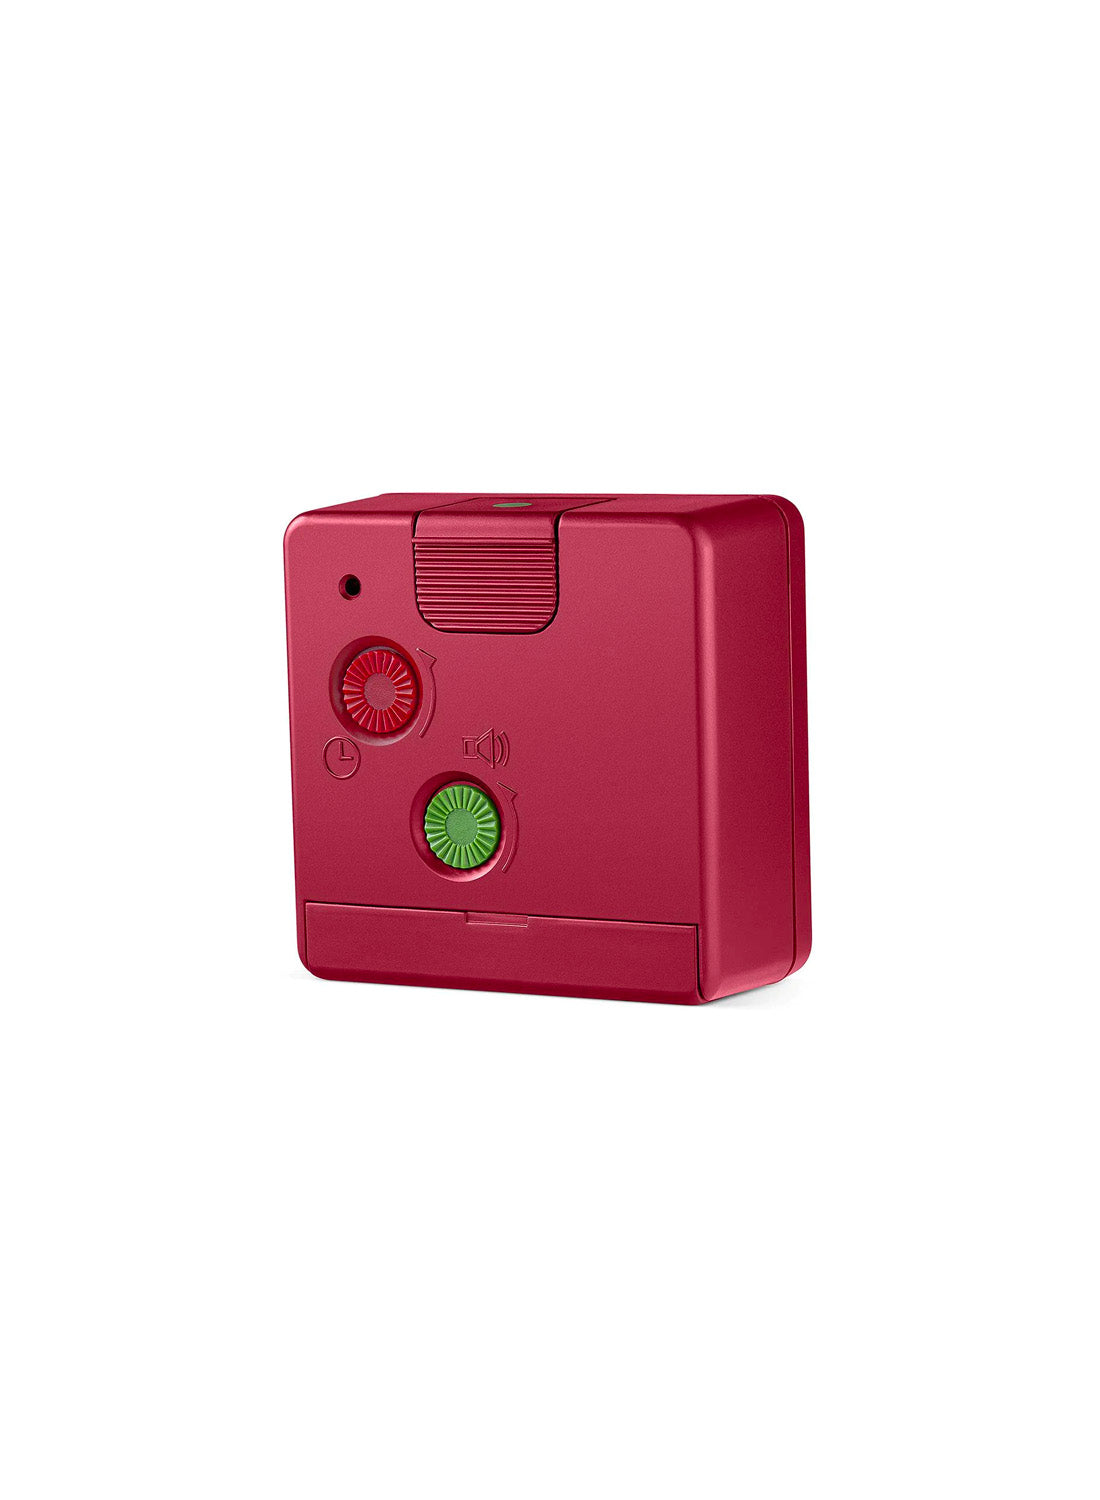 Braun Travel Alarm Clock BC02 - Red